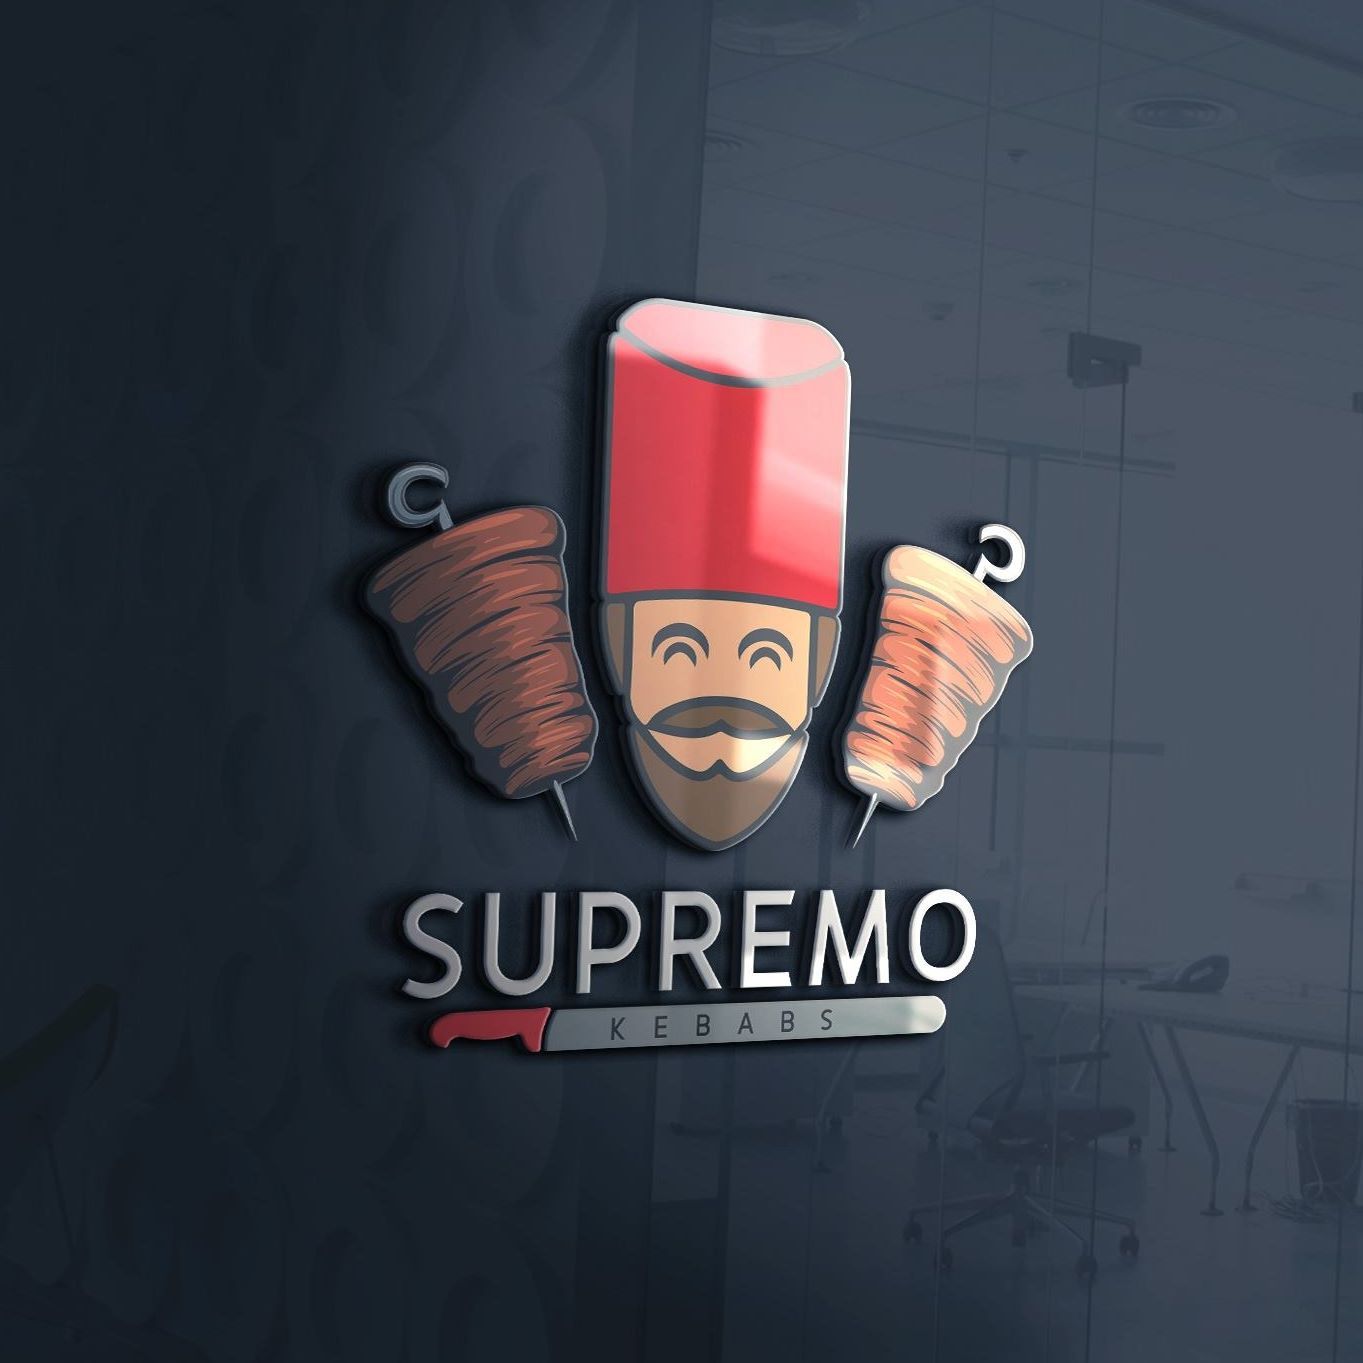 Supremo Kebabs